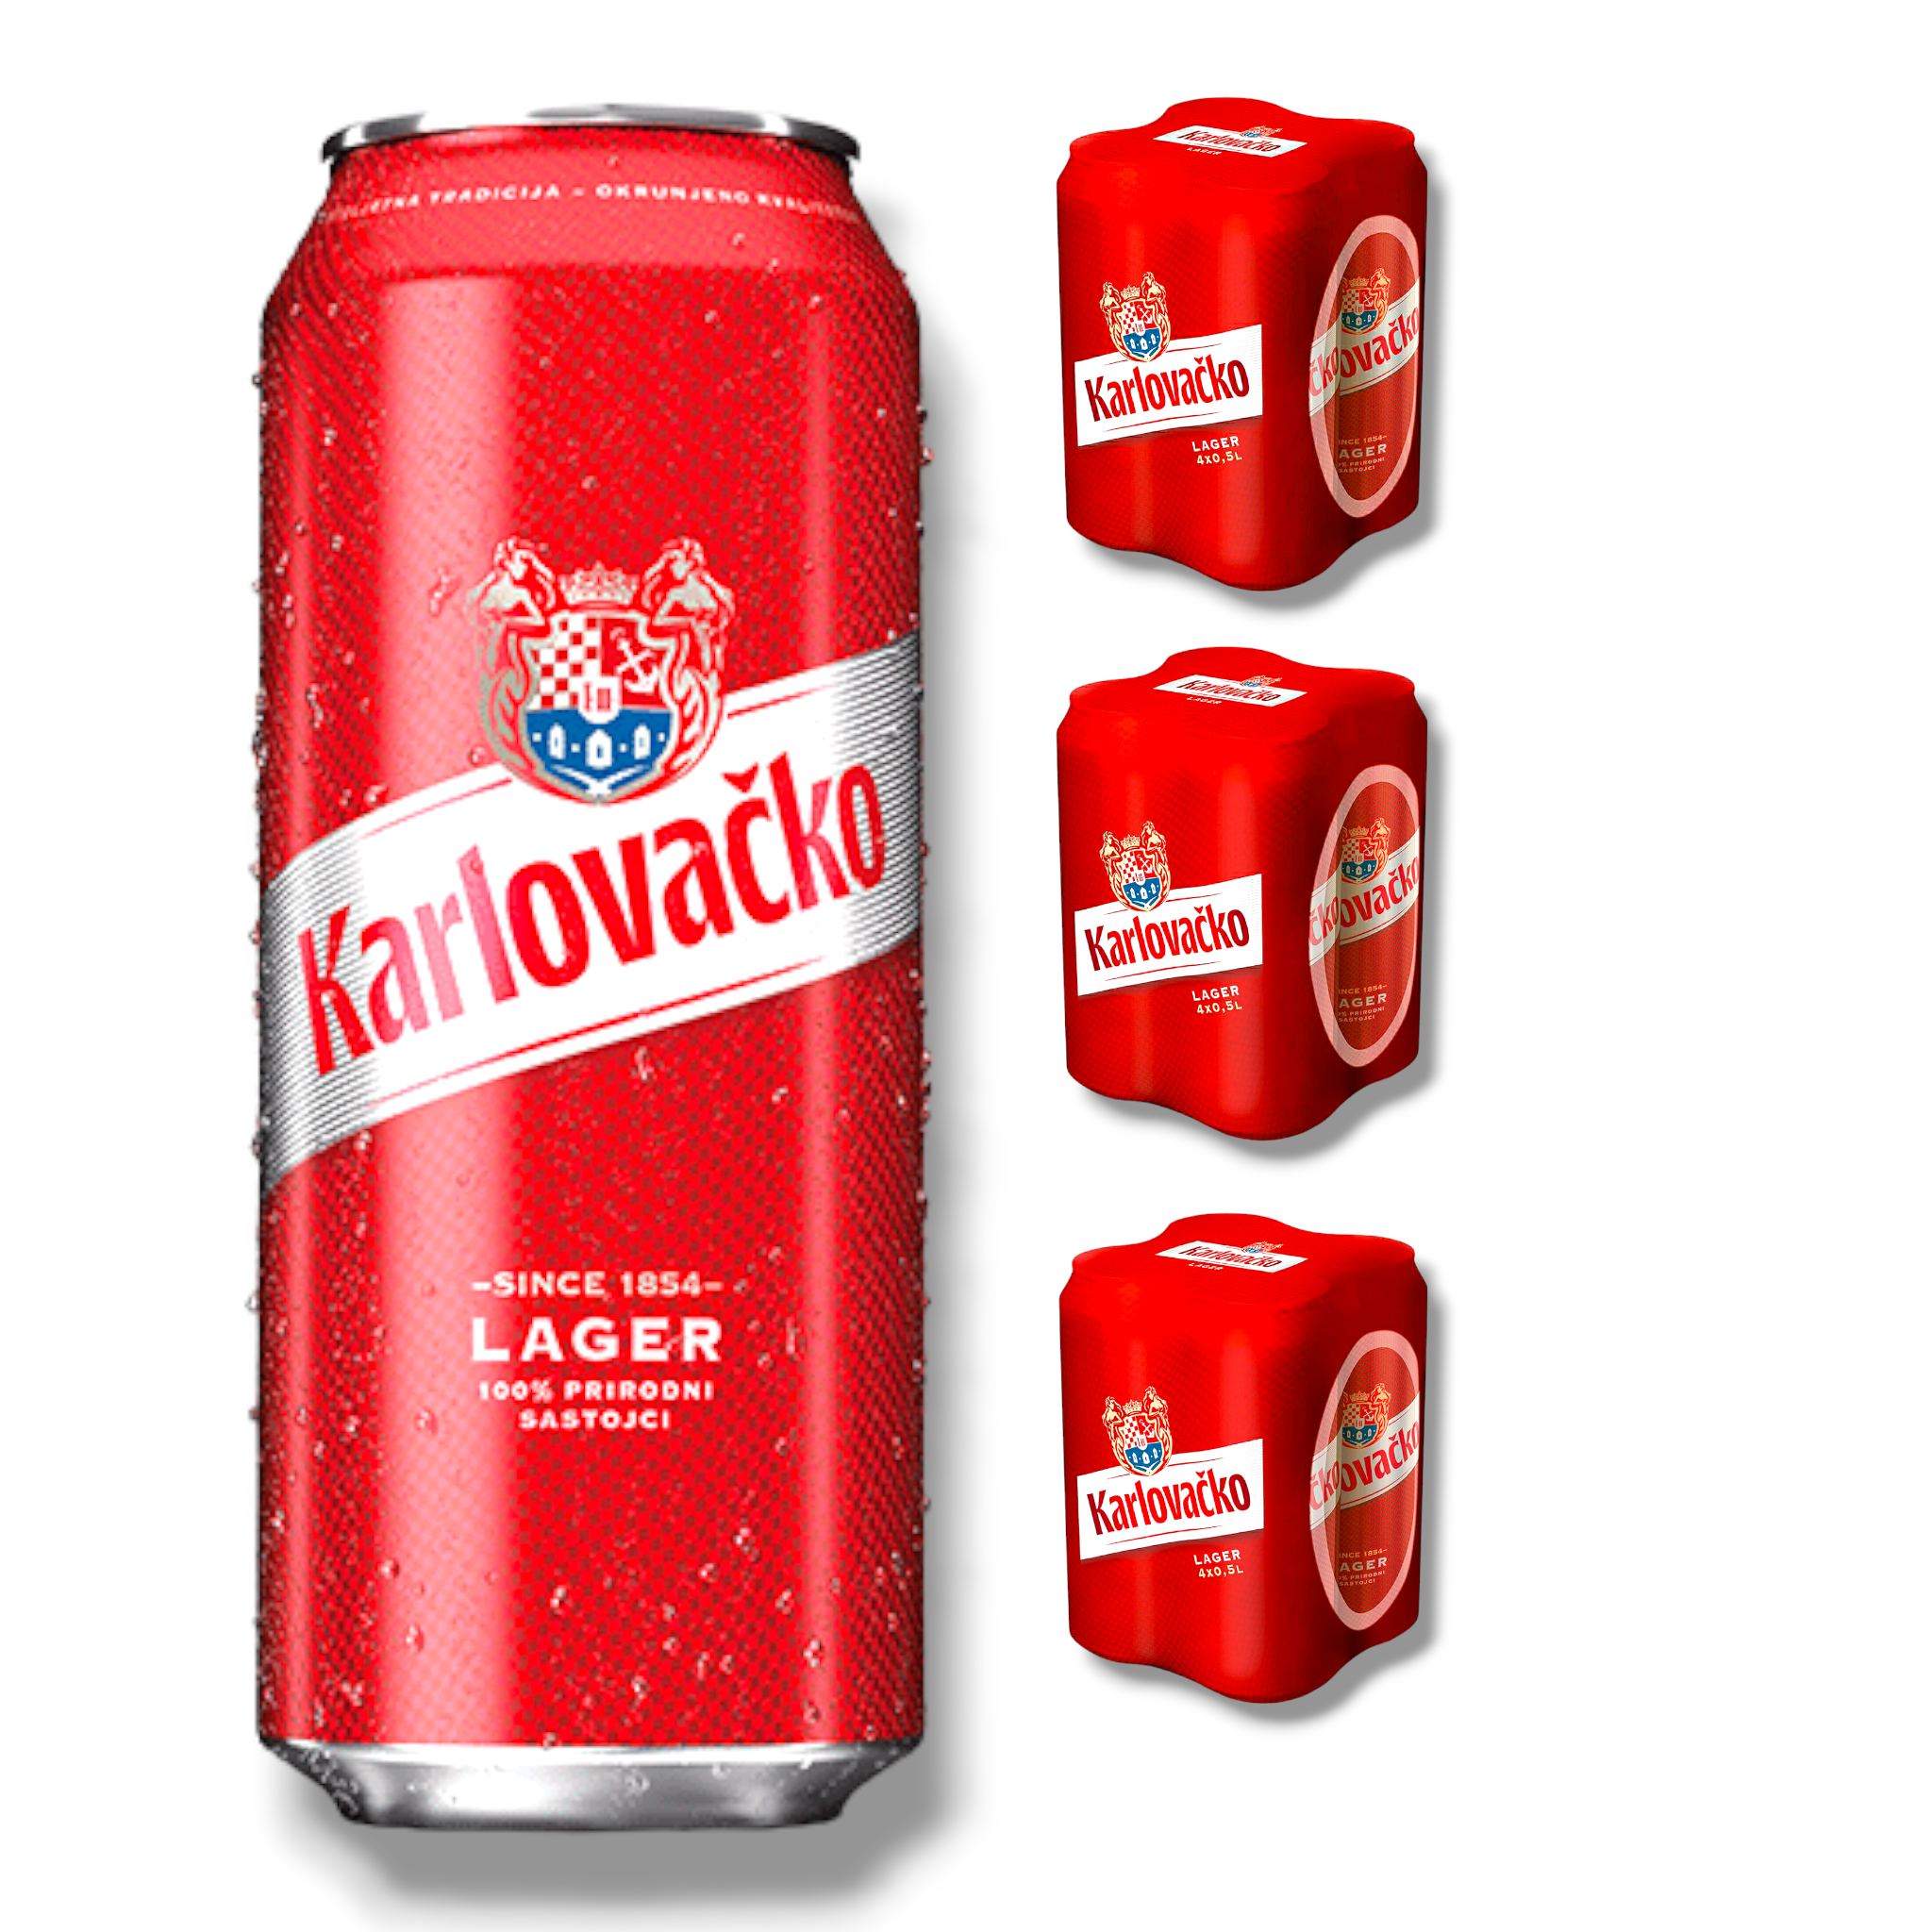 Karlovacko Lager 0,5l Dose - Lagerbier aus Kroatien mit 5,4% Vol.